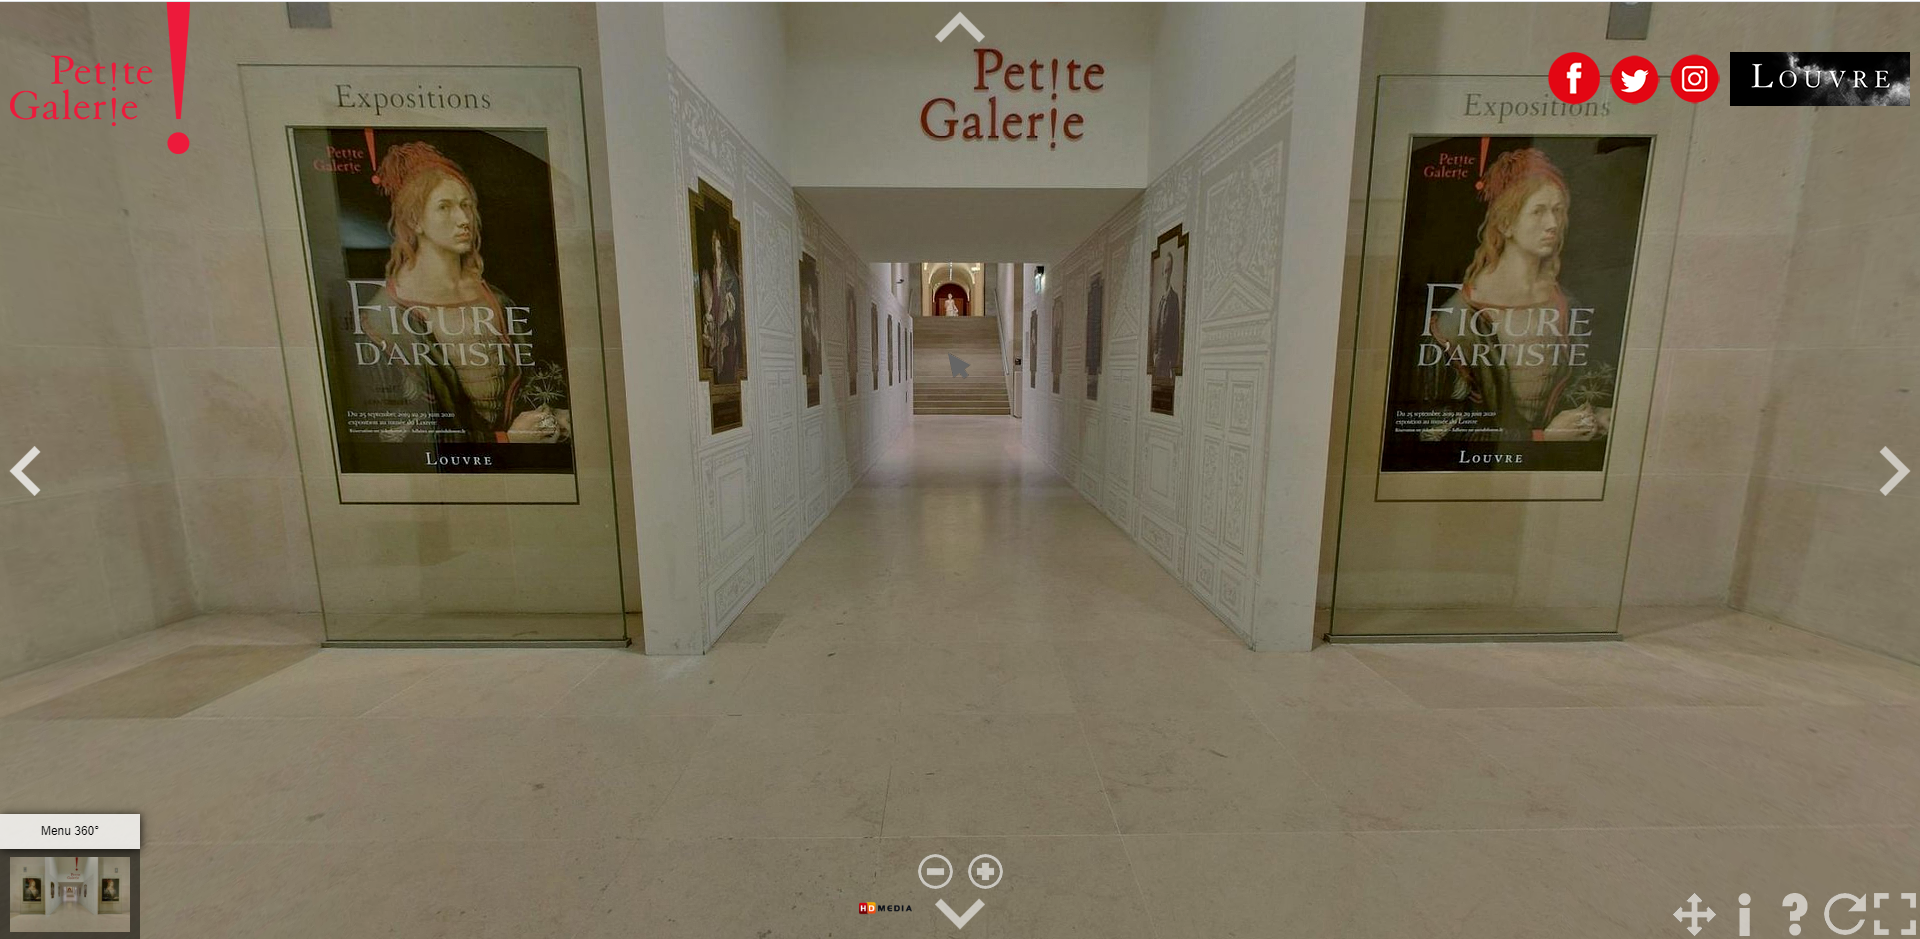 La petite galerie du Louvre